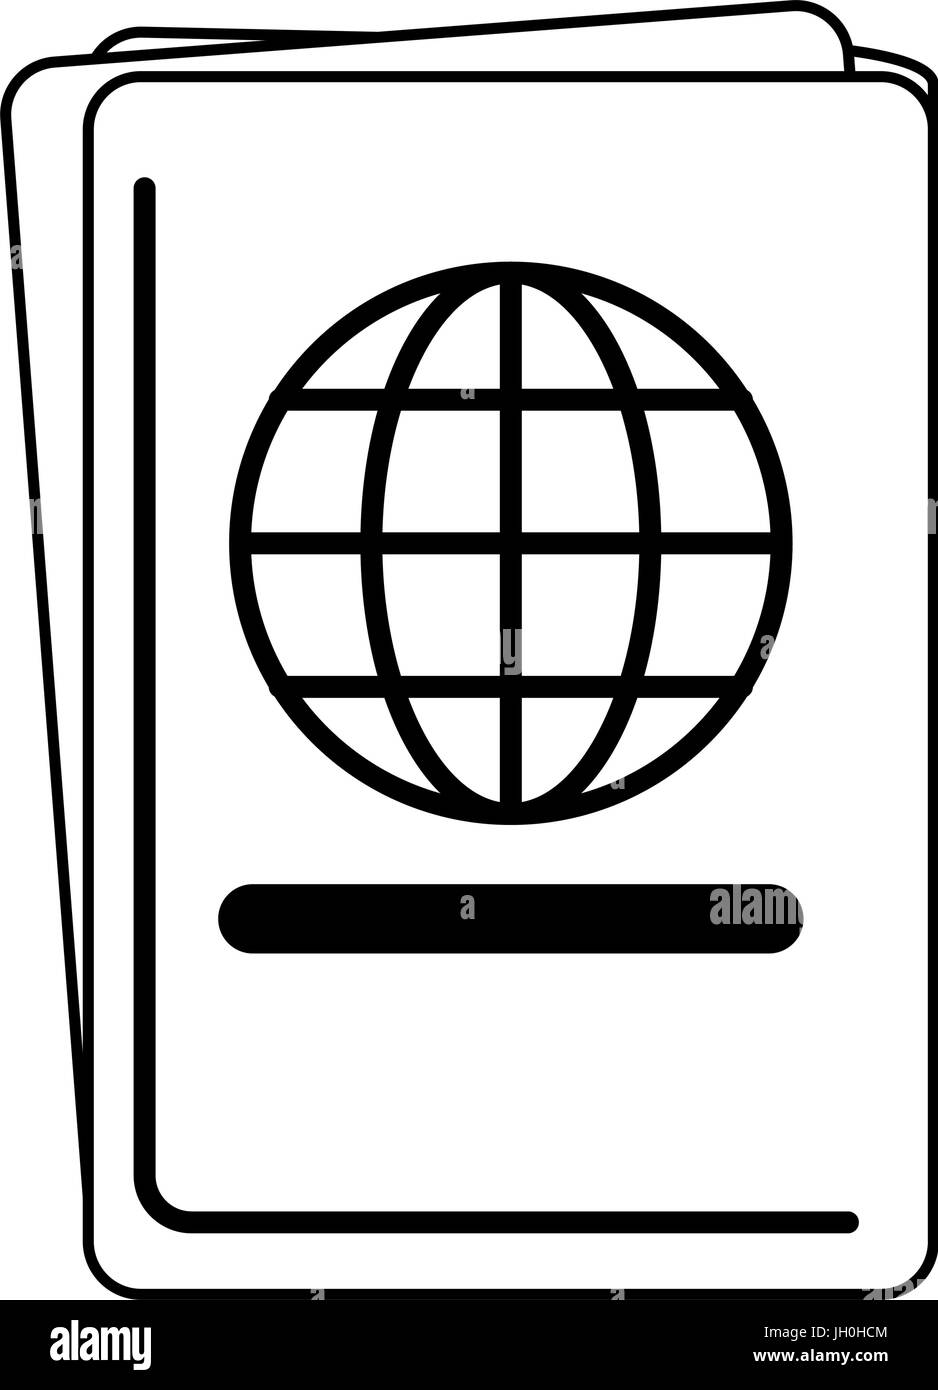 closed passport icon image  Stock Vector